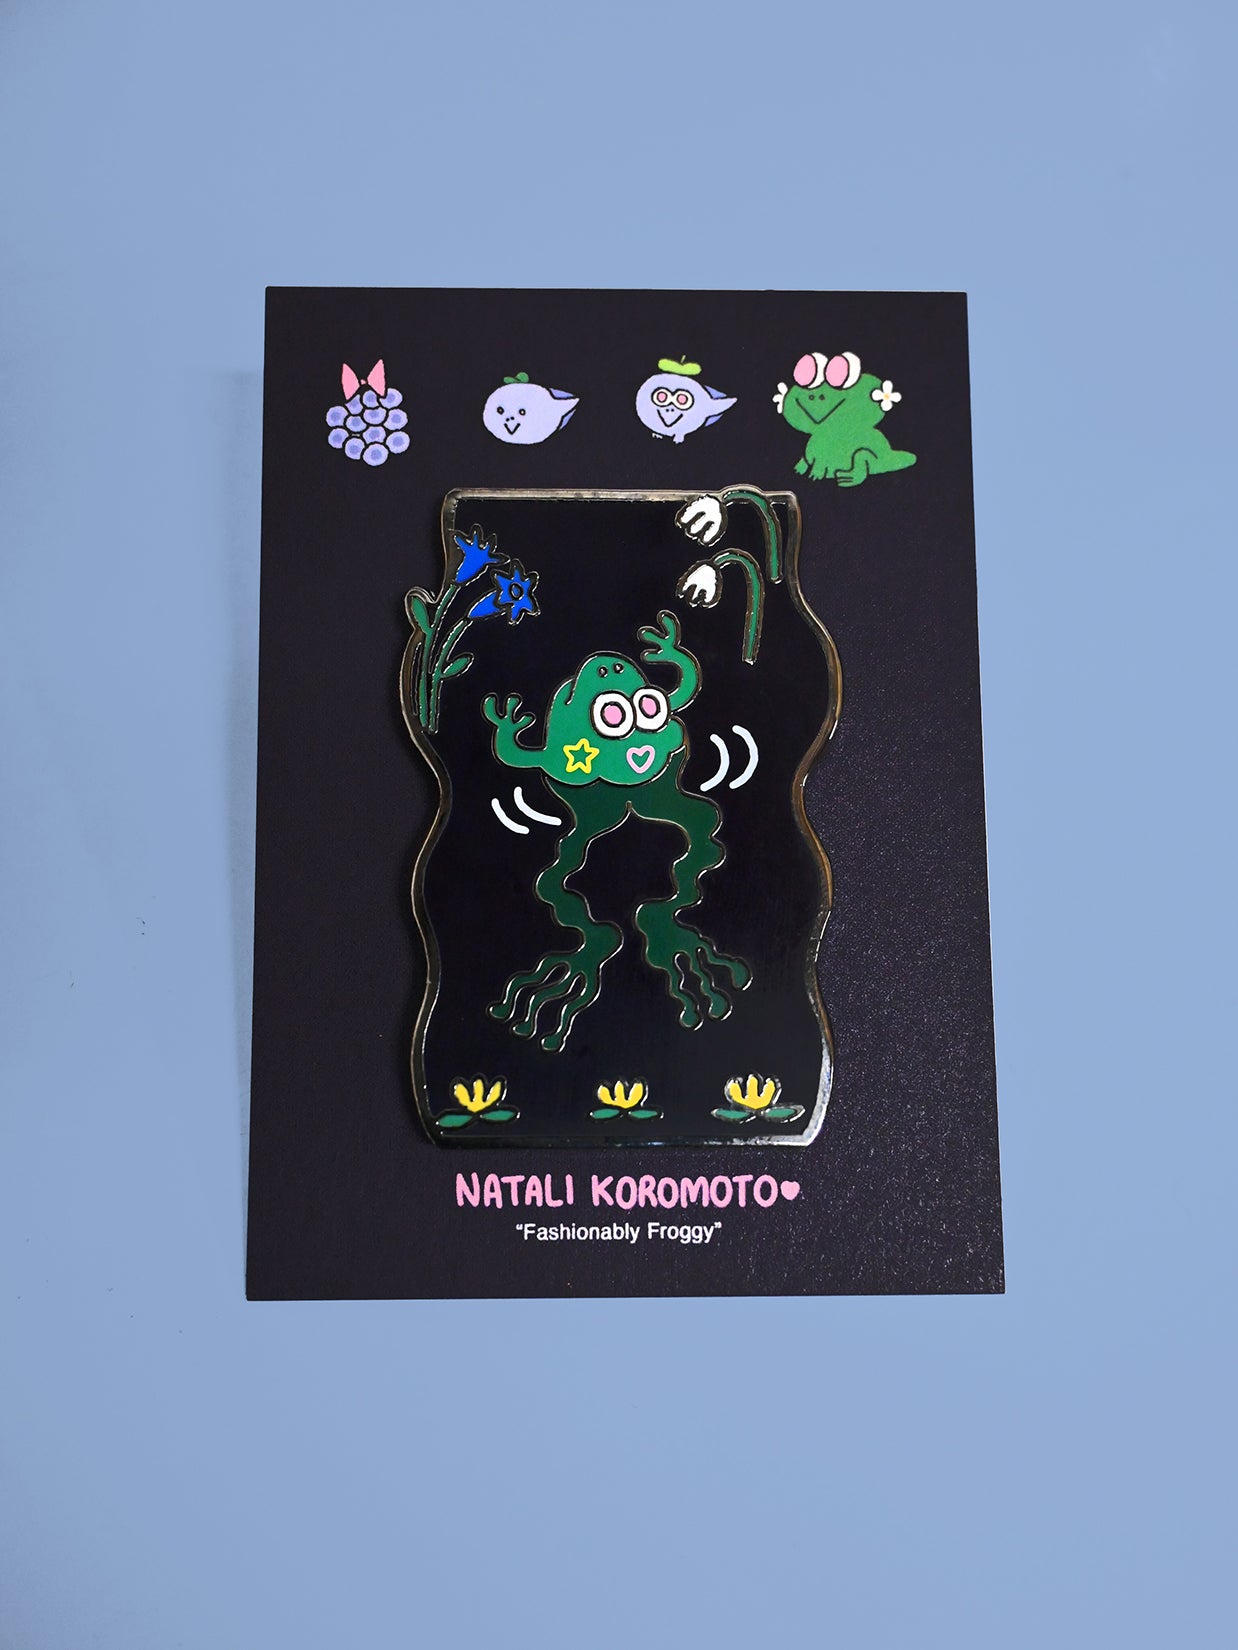 Natali Koromoto design "Fashionably Froggy" Enamel Pin